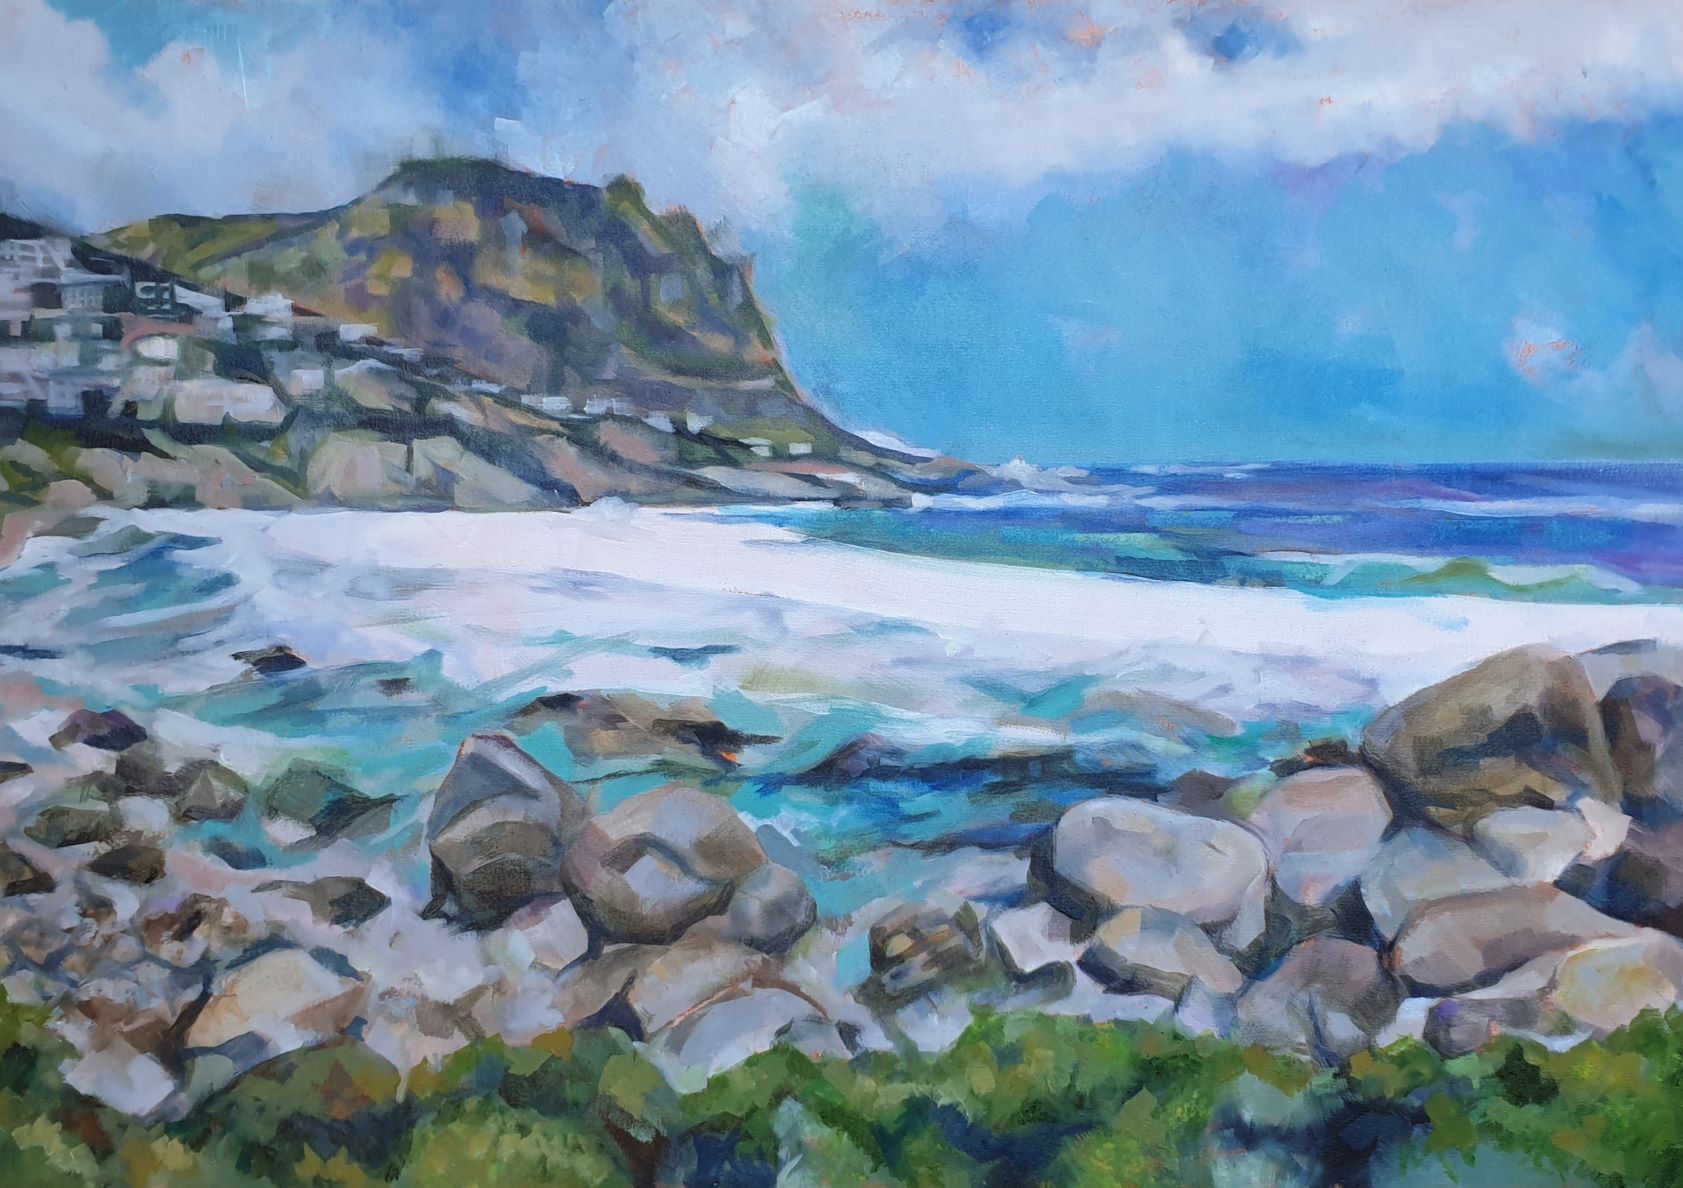 Painting of Llandudno beach and surrounding bay